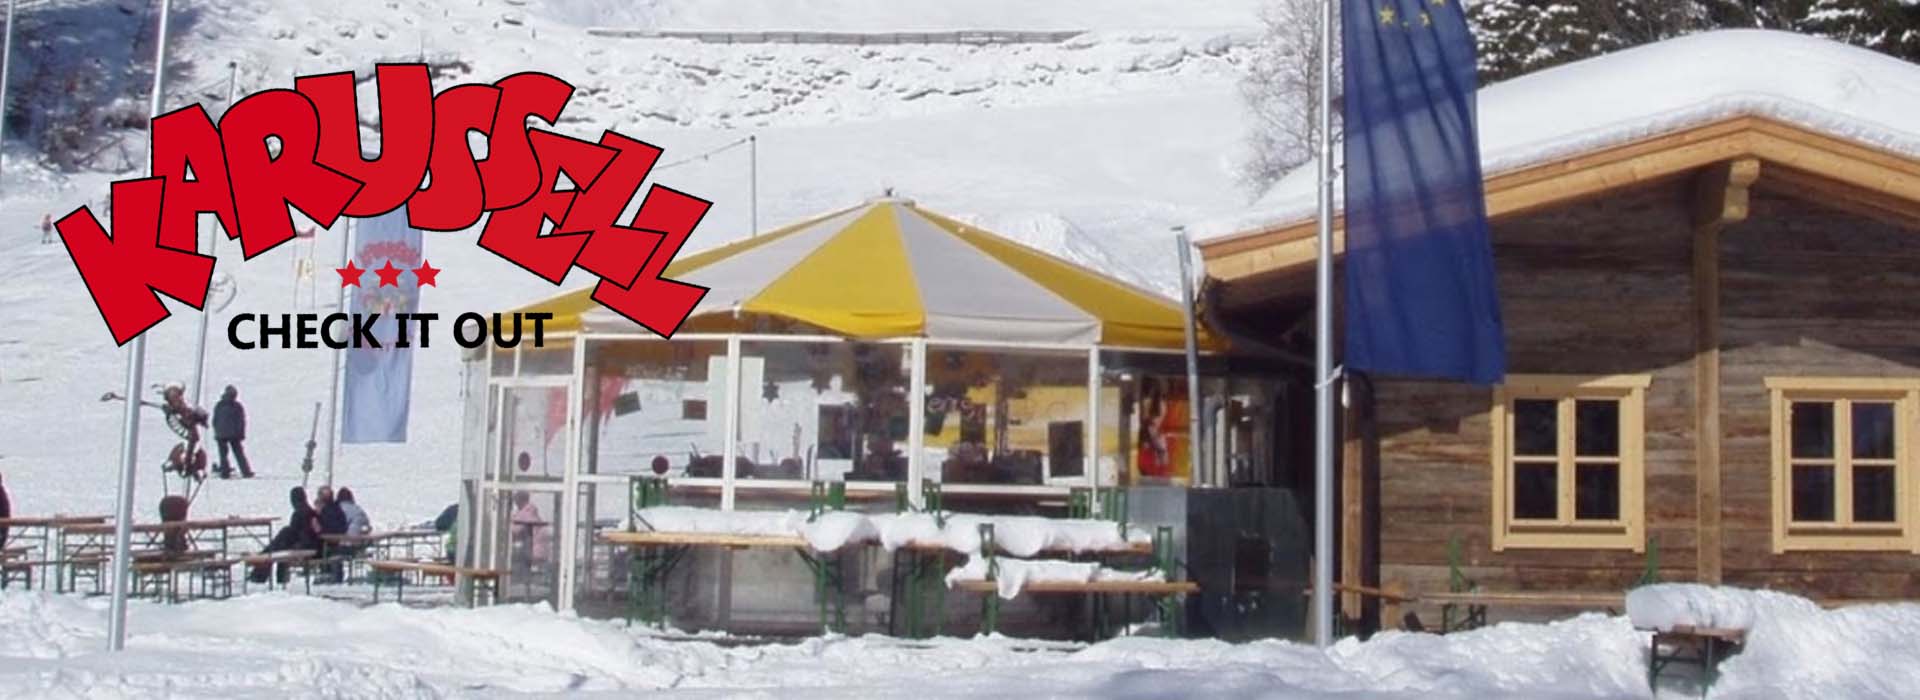 Après ski bar - the Karussell bar in Lofer